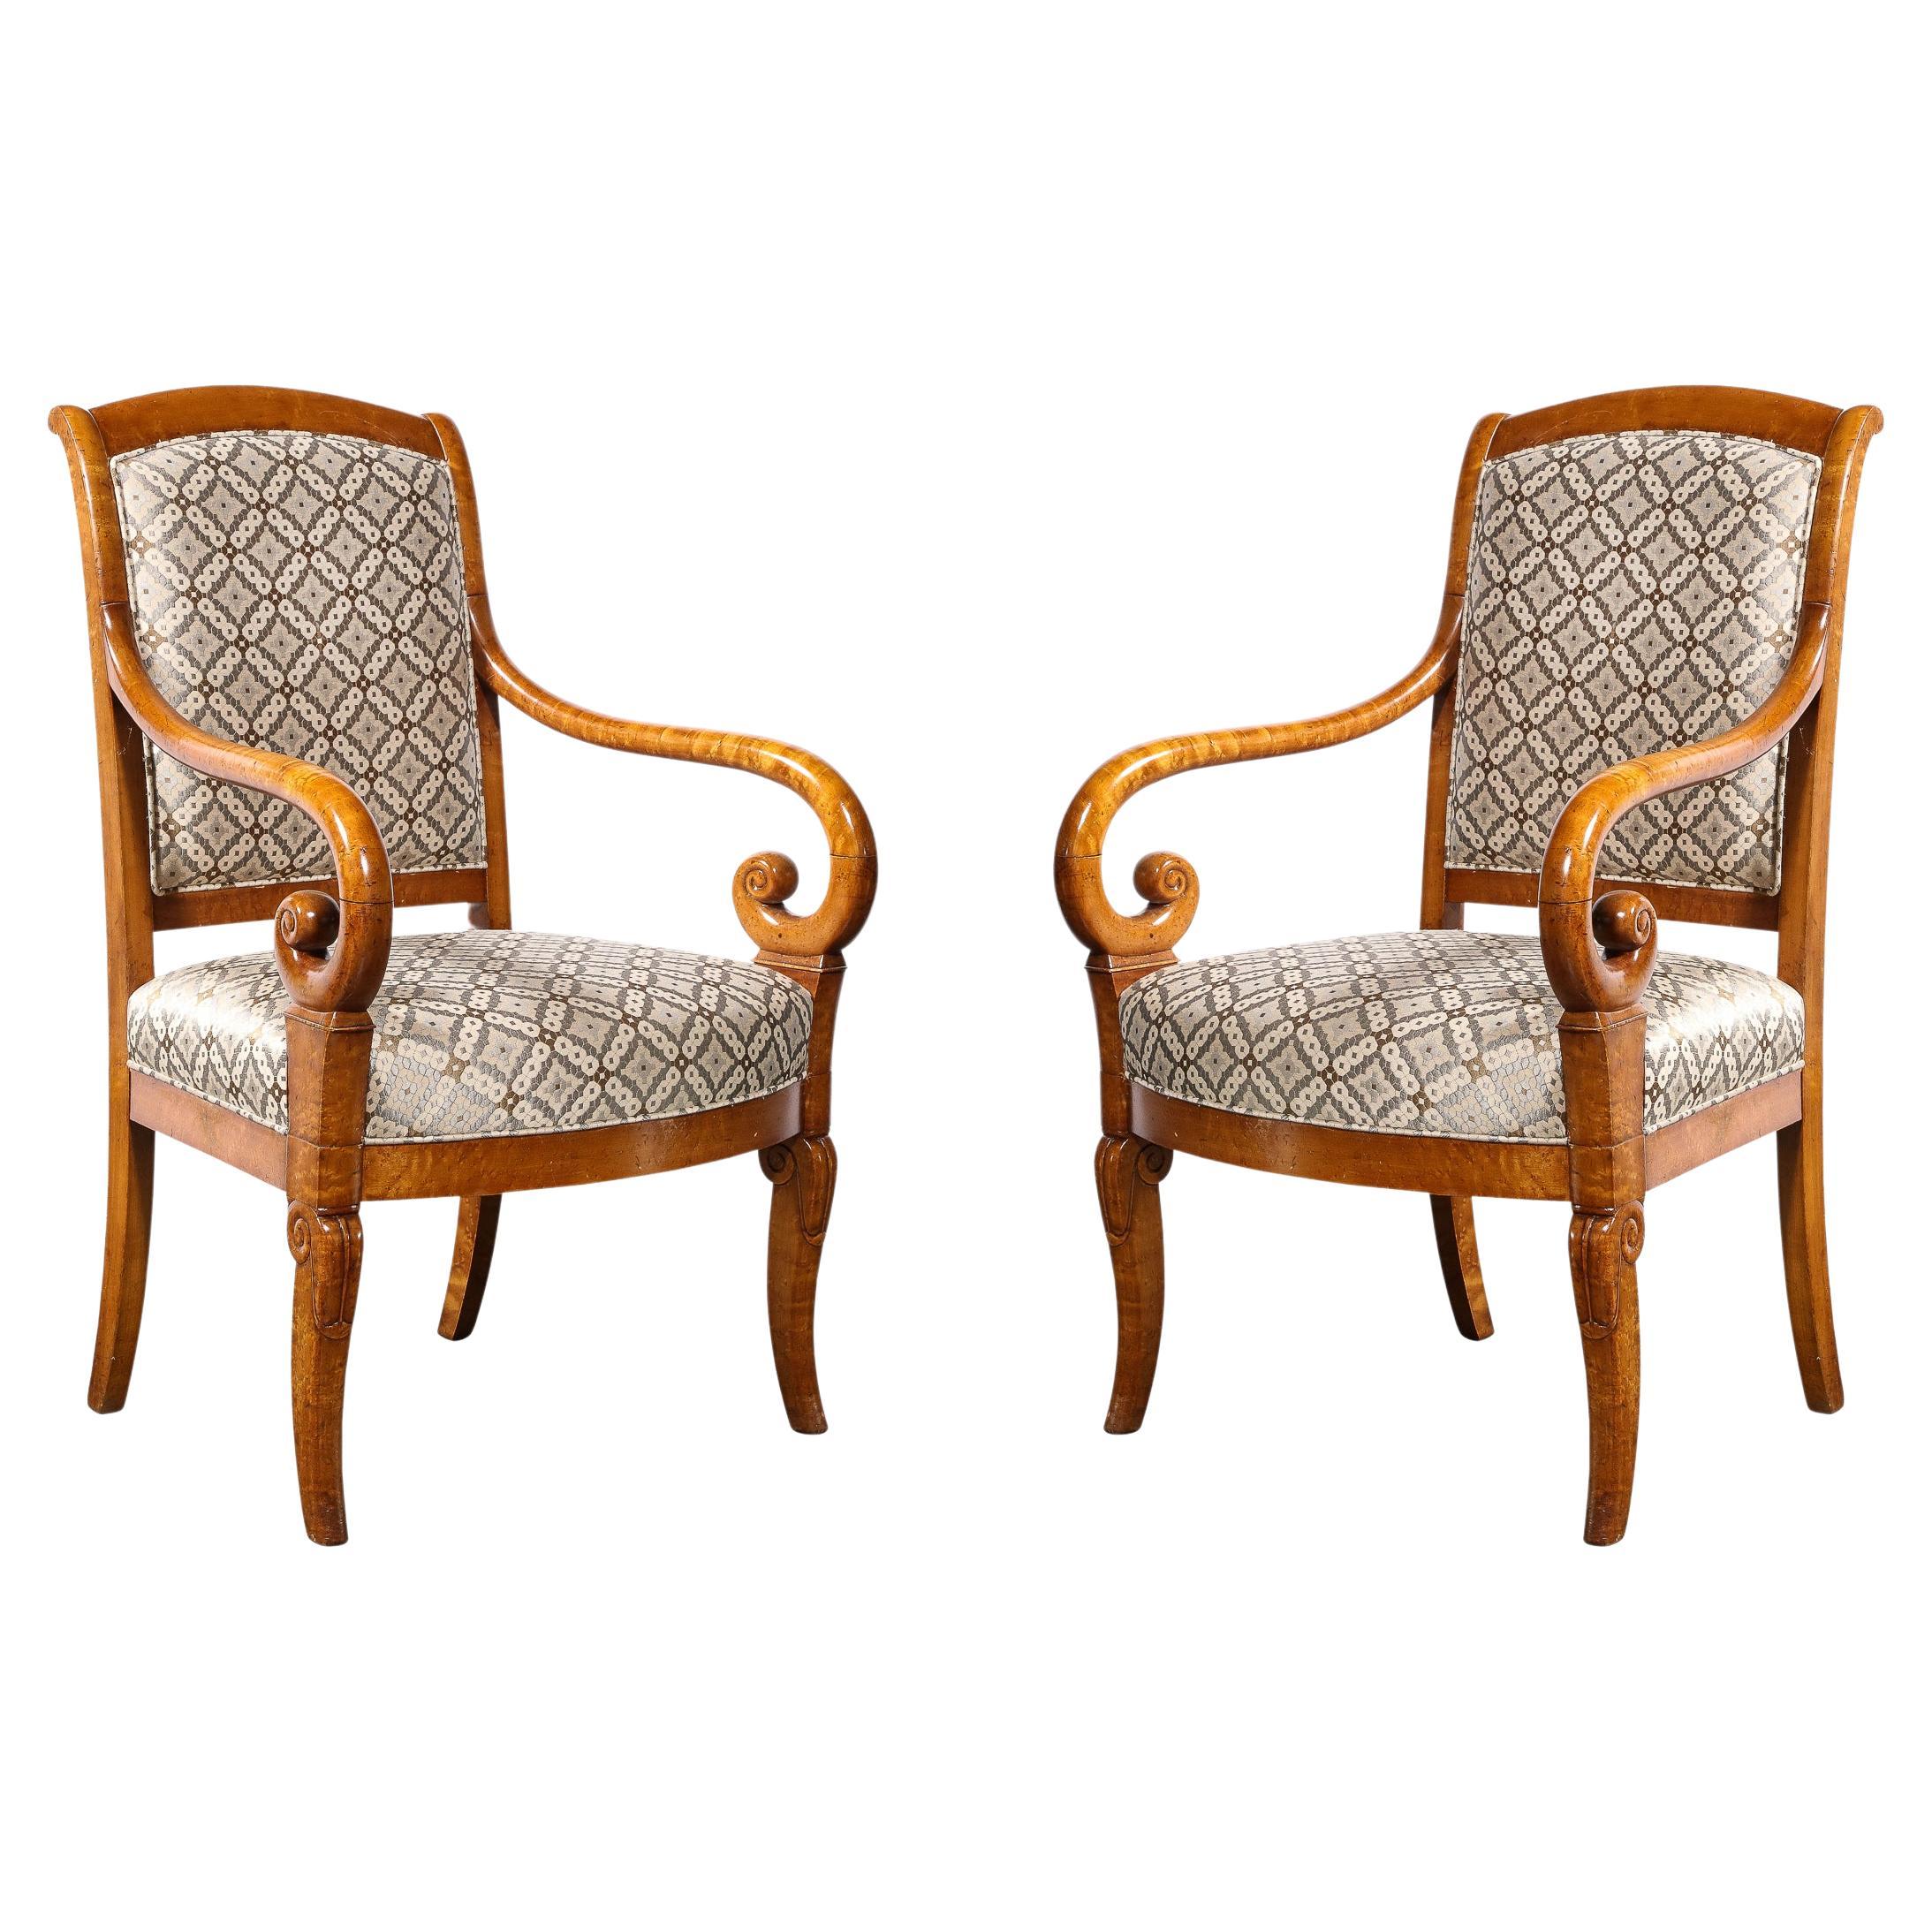 Paar Biedermeier-Sessel in Schnörkelform aus handgeformter, gemaserter Ulme